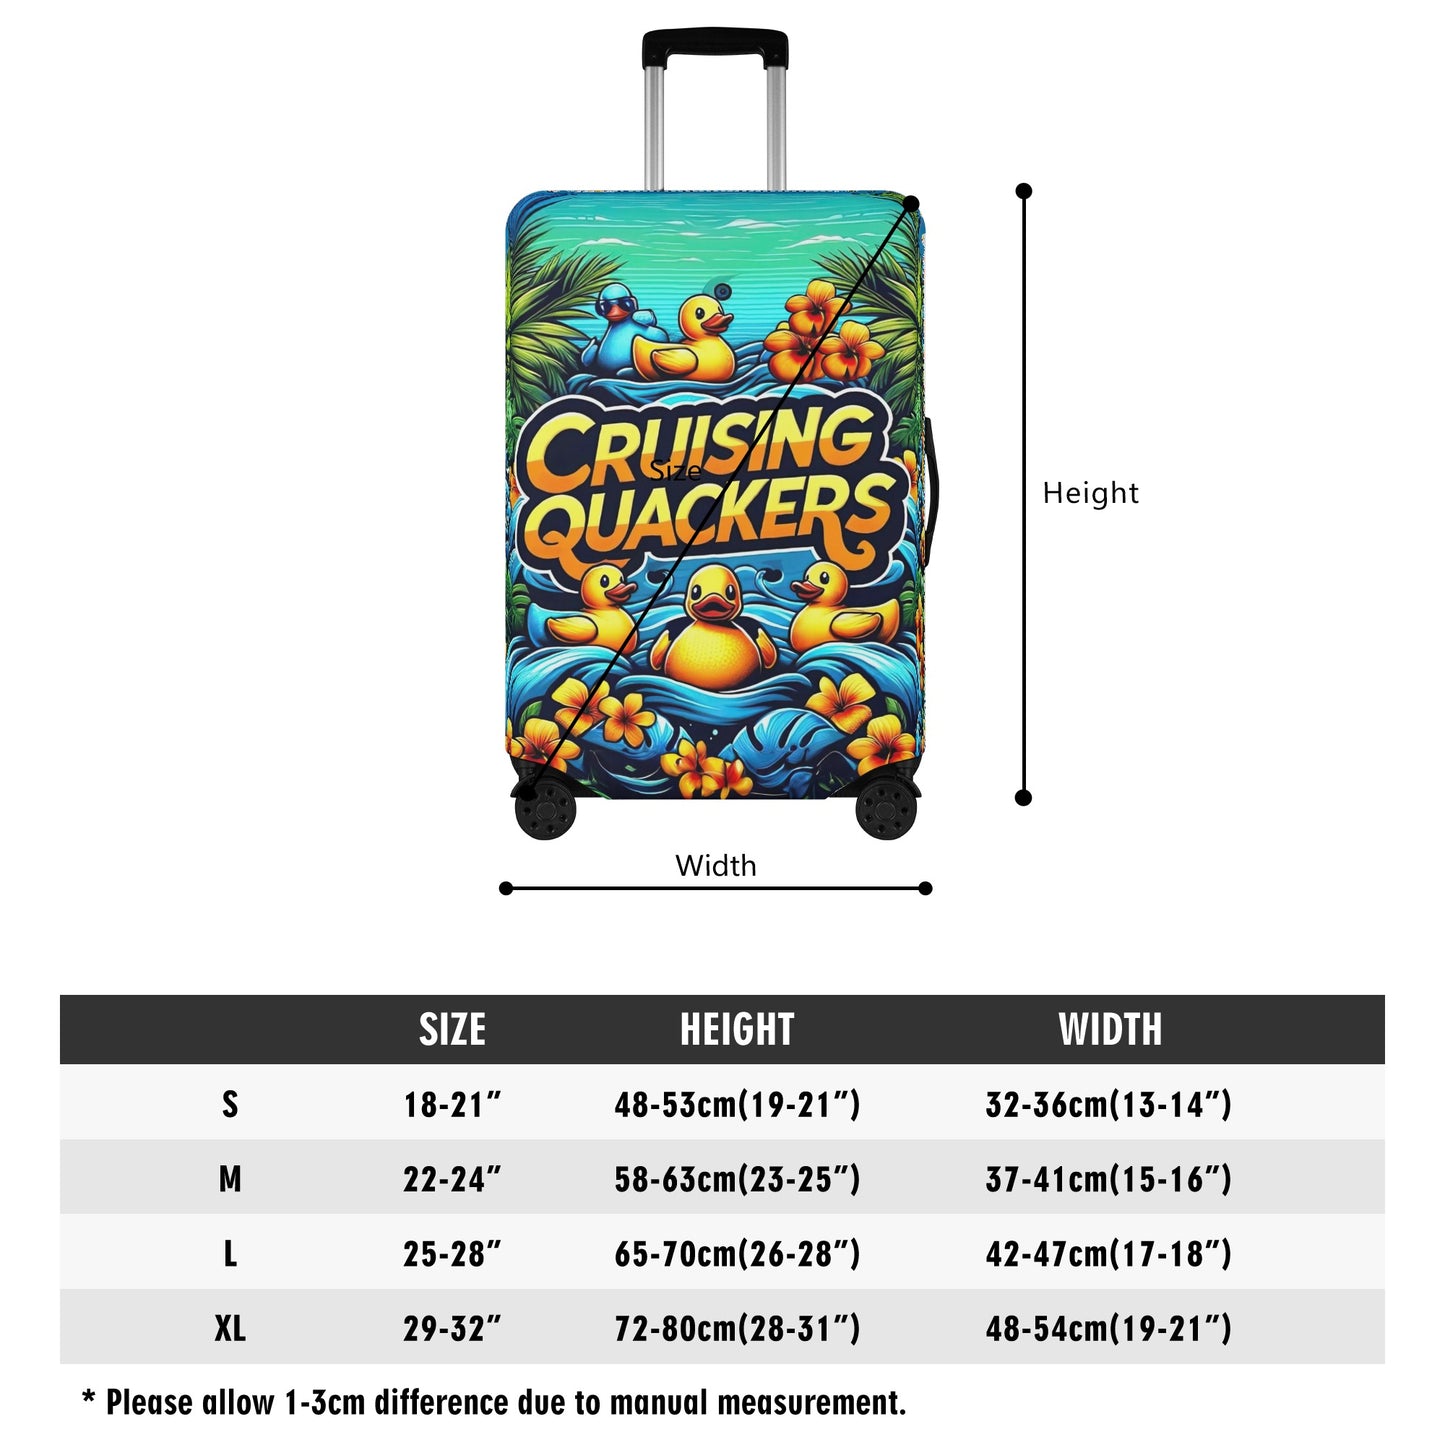 Cruising Quackers Luggage Cover